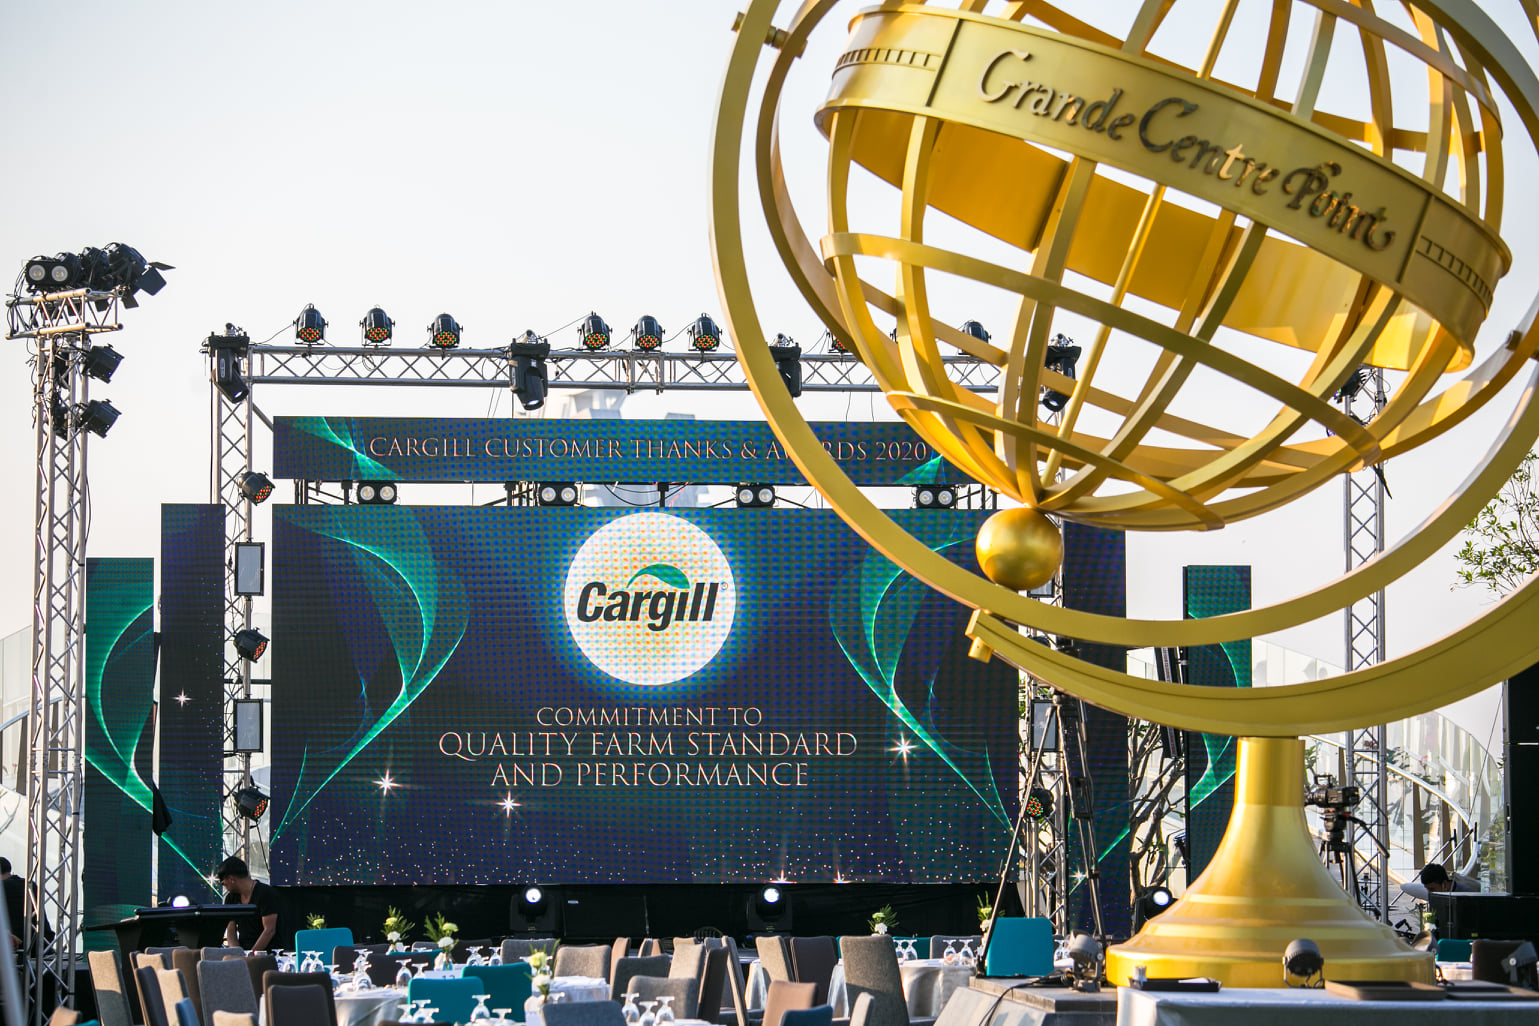 Cargill Customers Thank & Awards 2020